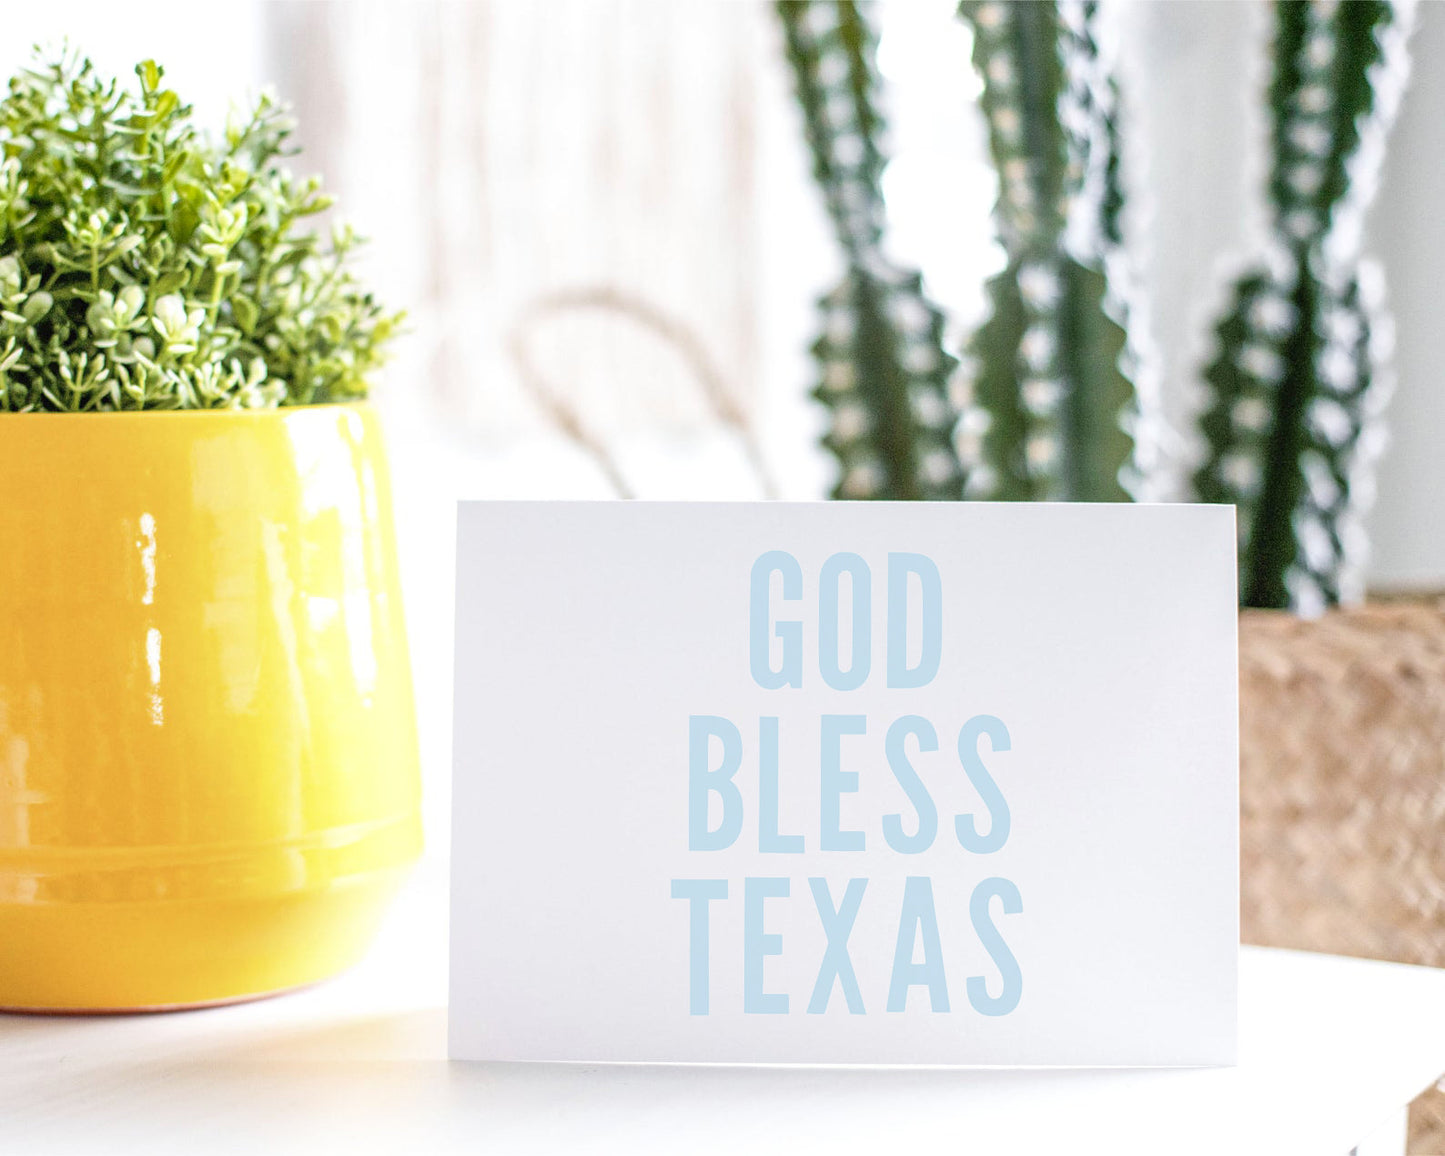 God Bless Texas Greeting Card